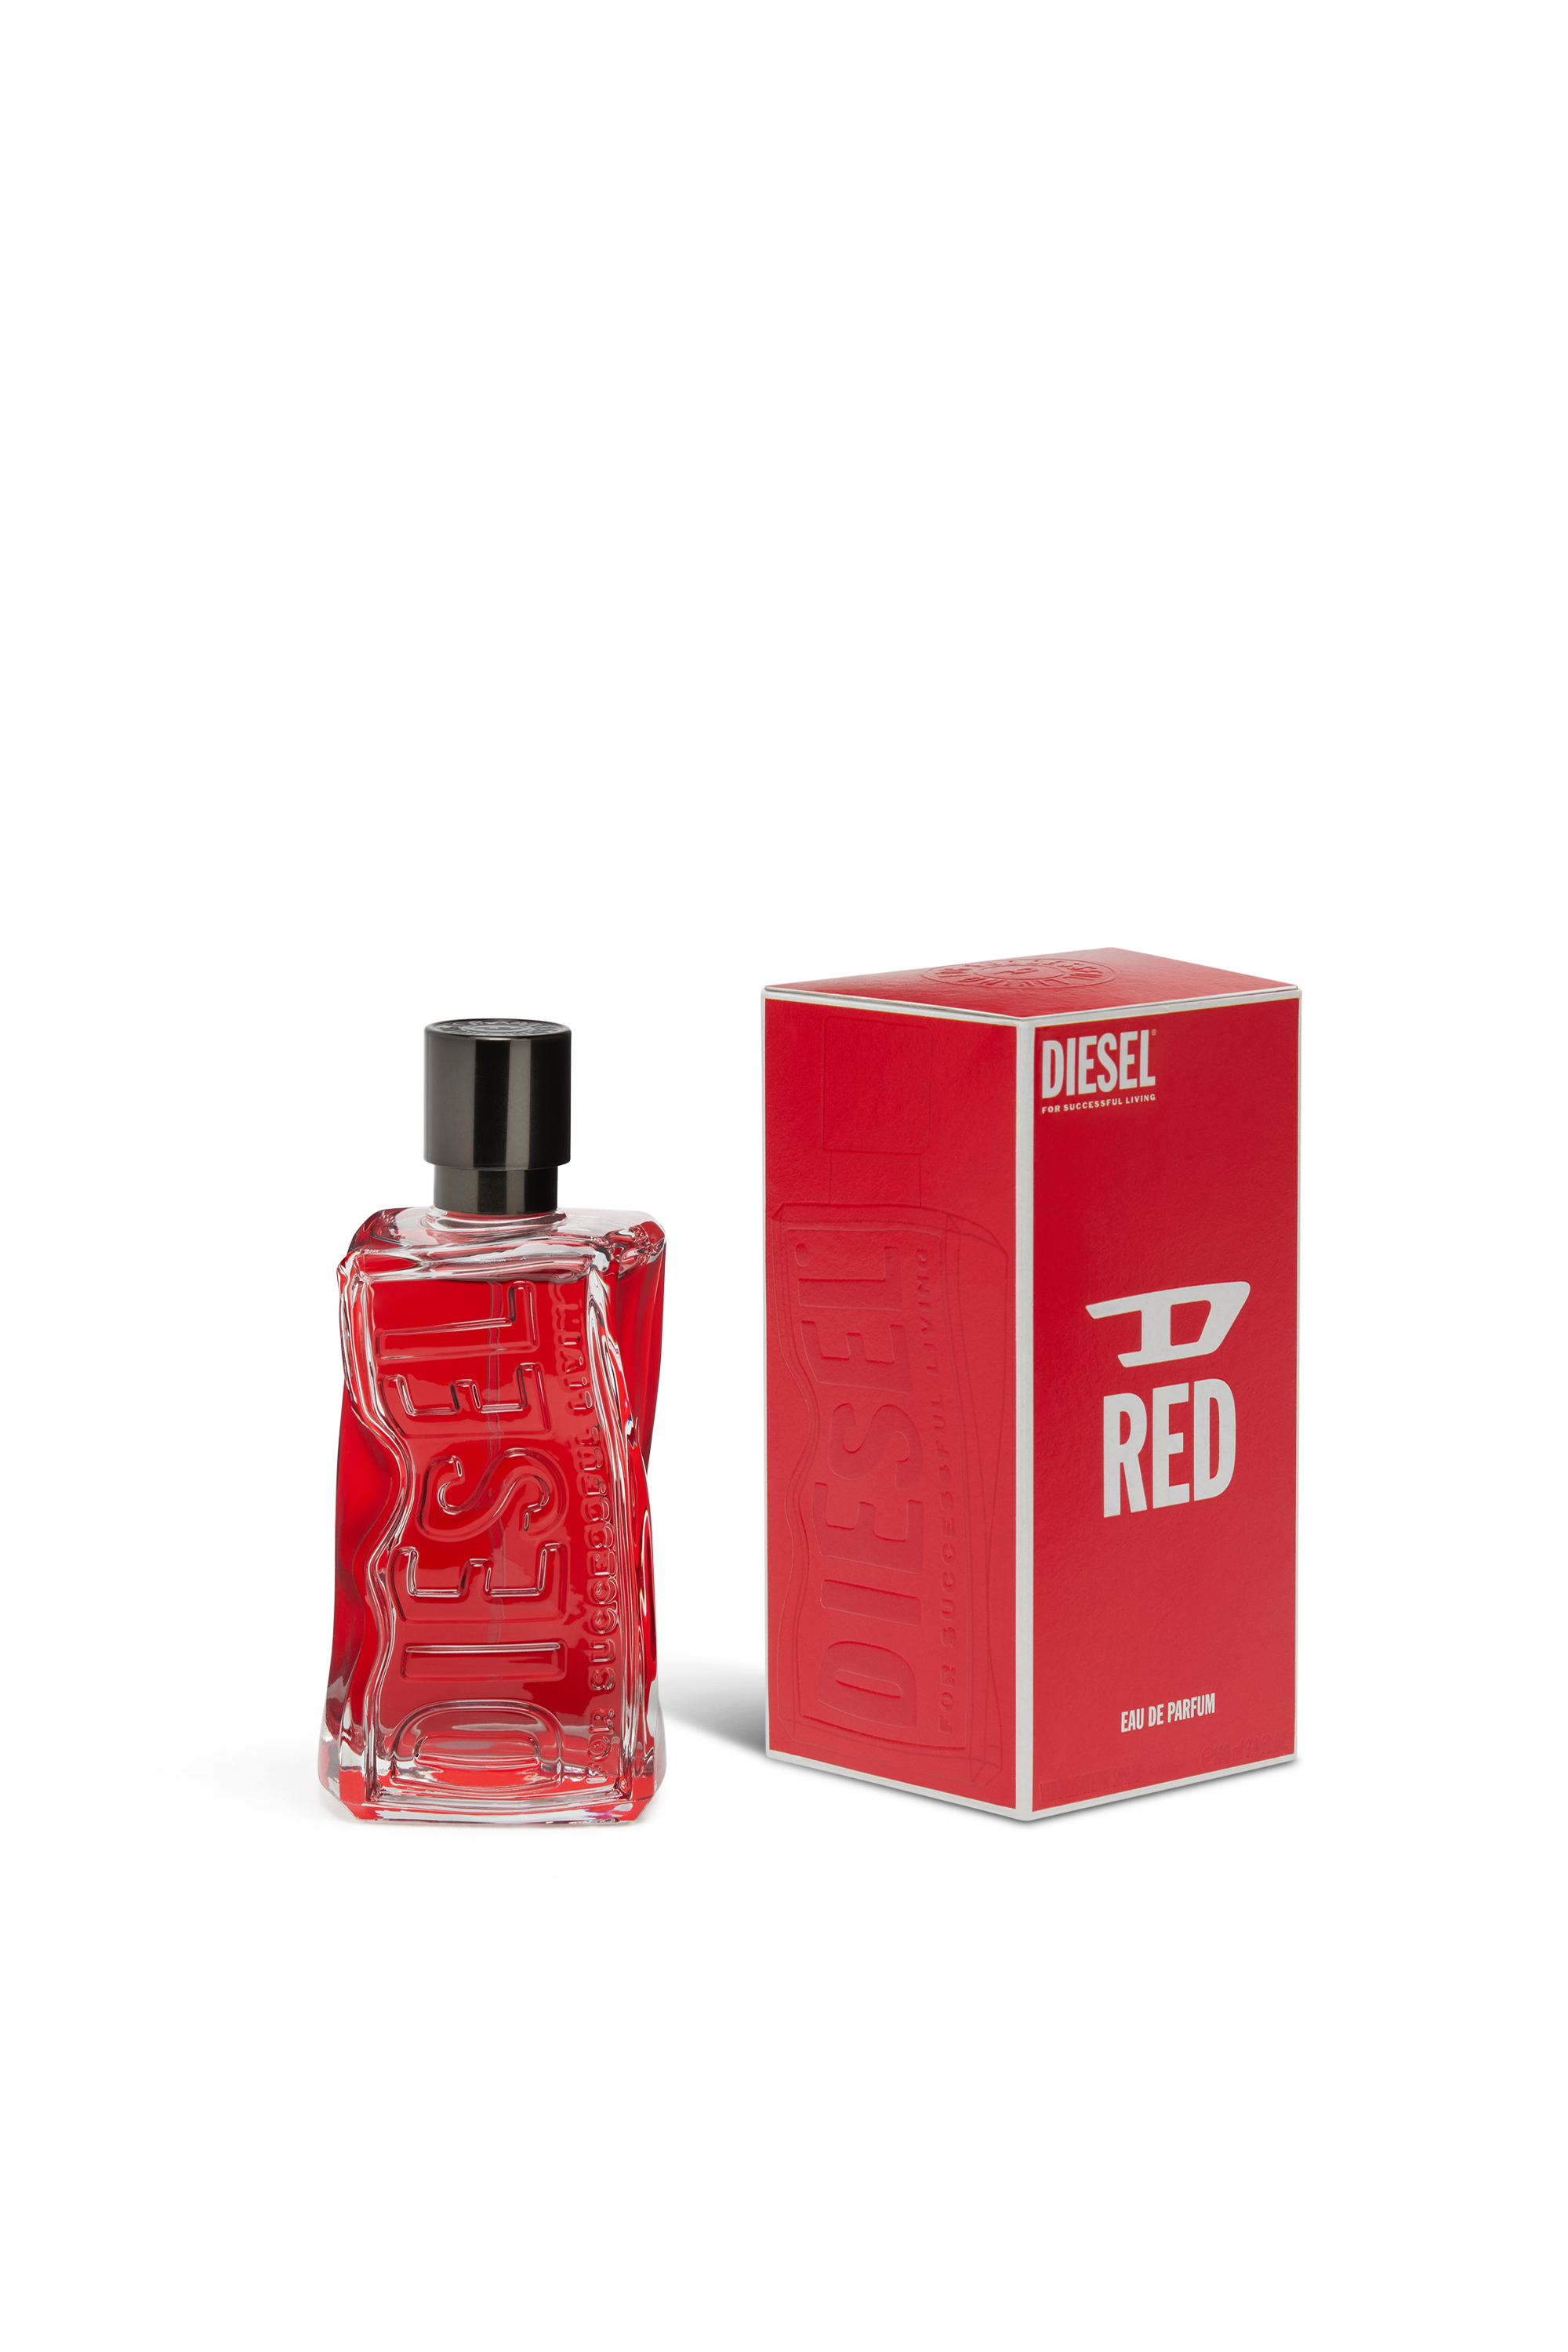 Diesel - D RED 30 ML, Man D RED 30ml, 1 FL.OZ., Eau de Parfum in Red - Image 2